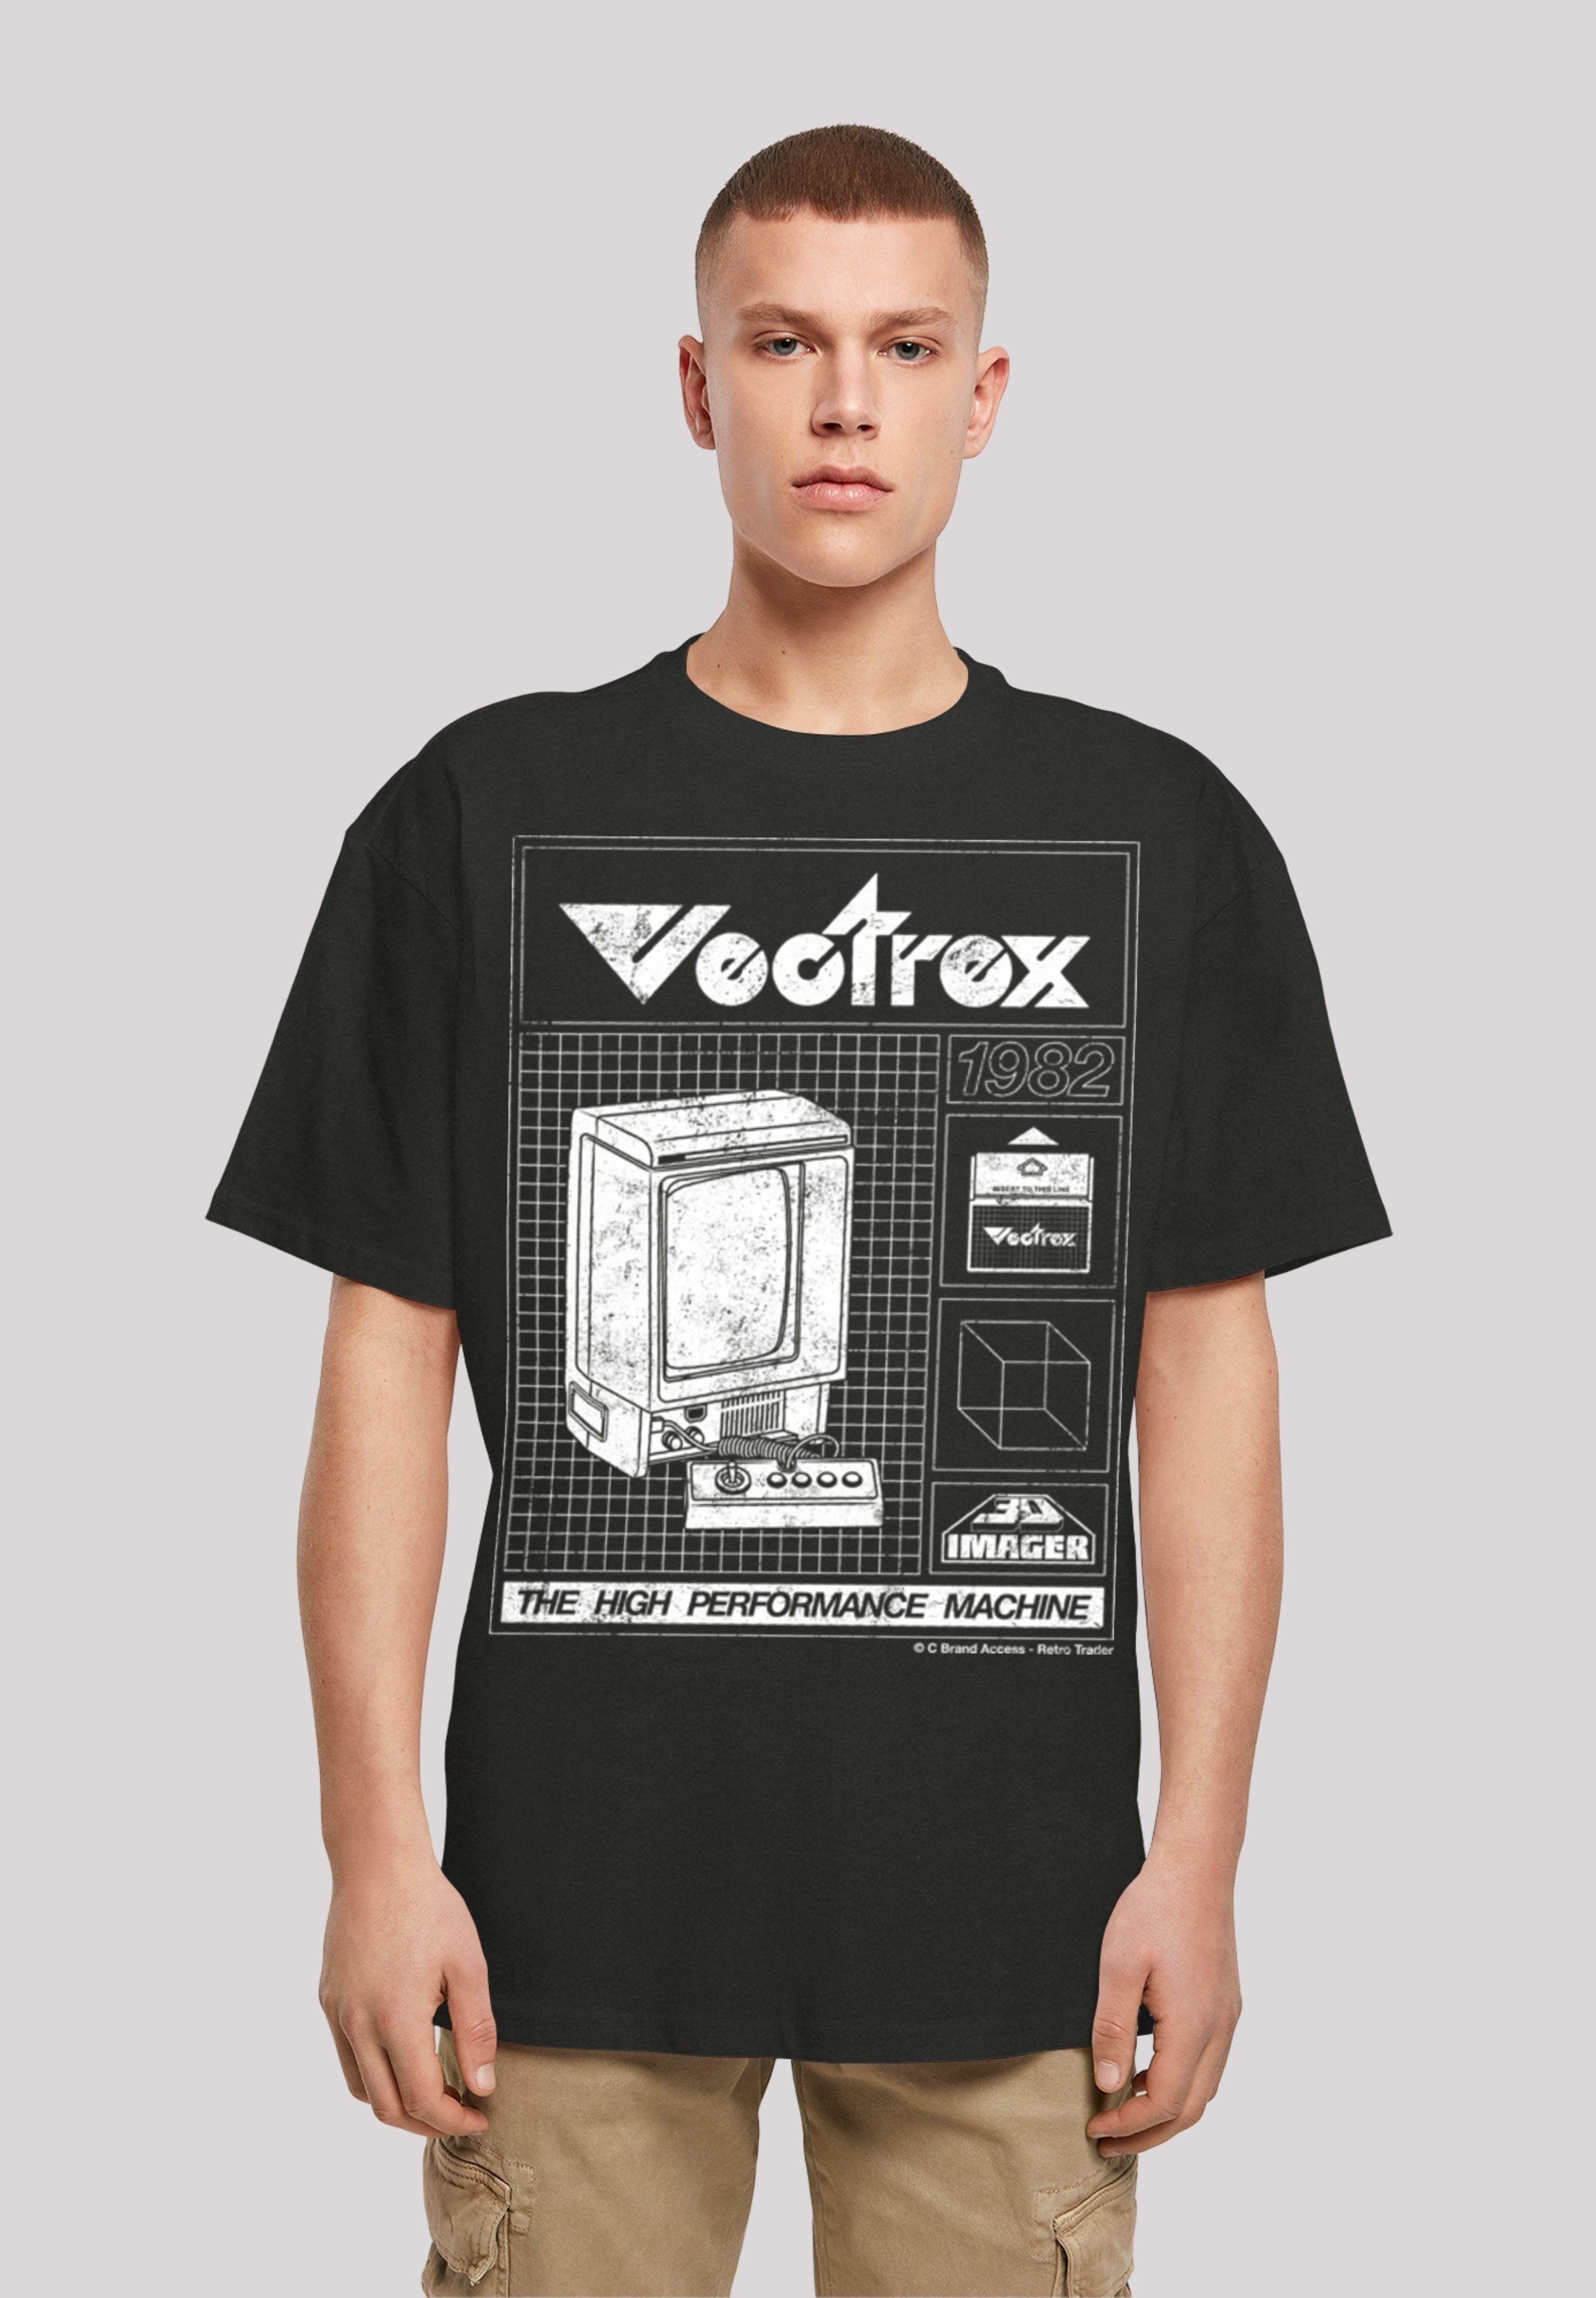 F4NT4STIC SEVENSQUARED Vectrex Gaming Print schwarz 1982 T-Shirt Retro